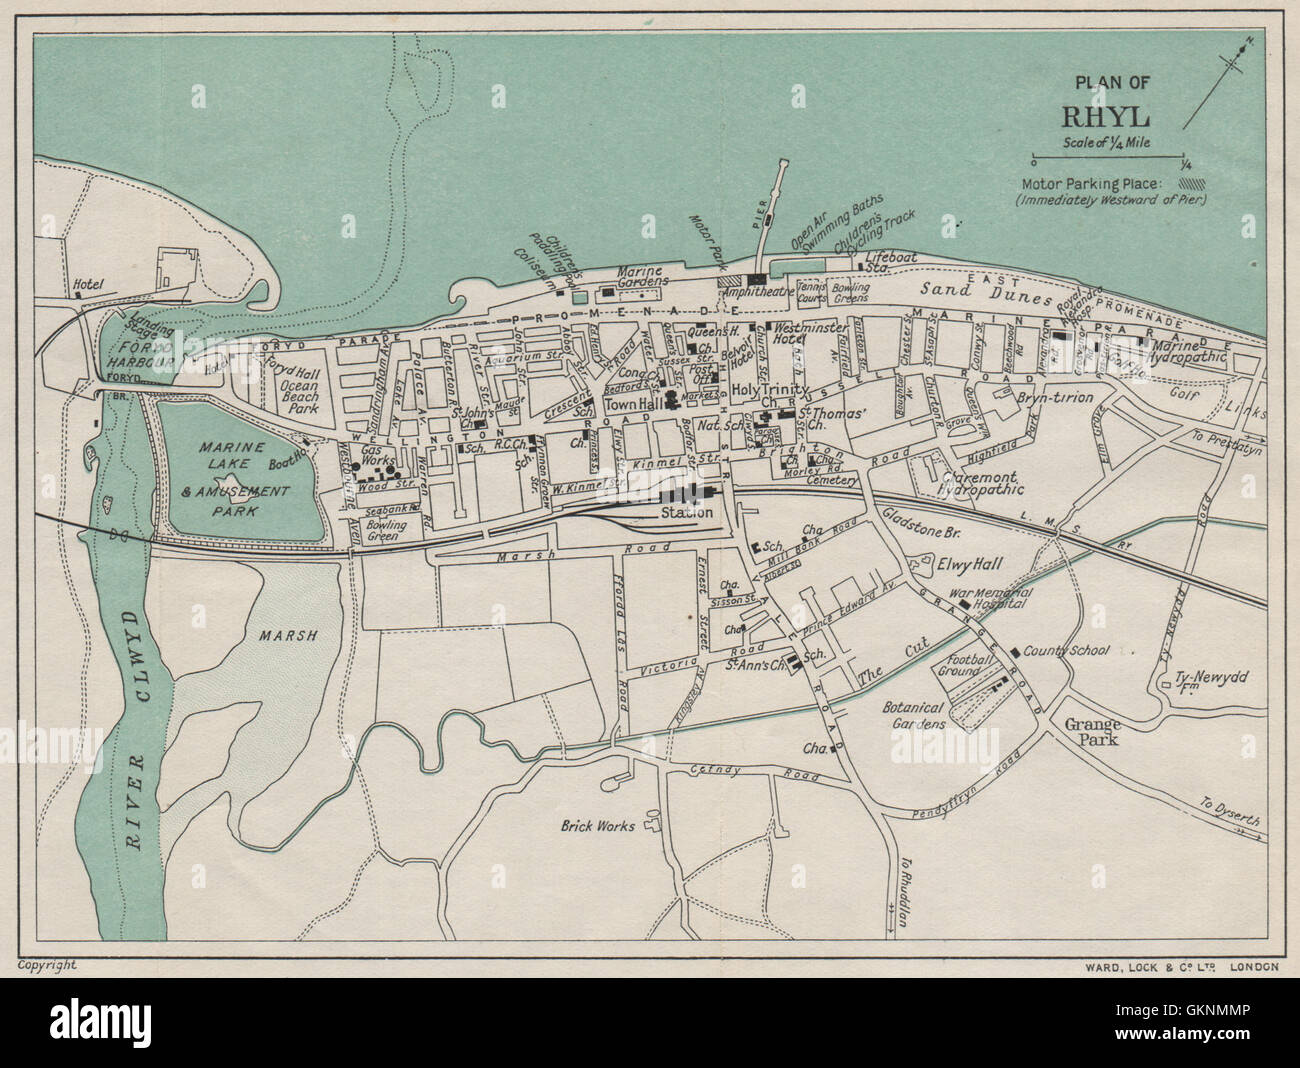 RHYL vintage town/city plan. Wales. WARD LOCK, 1930 vintage map Stock ...